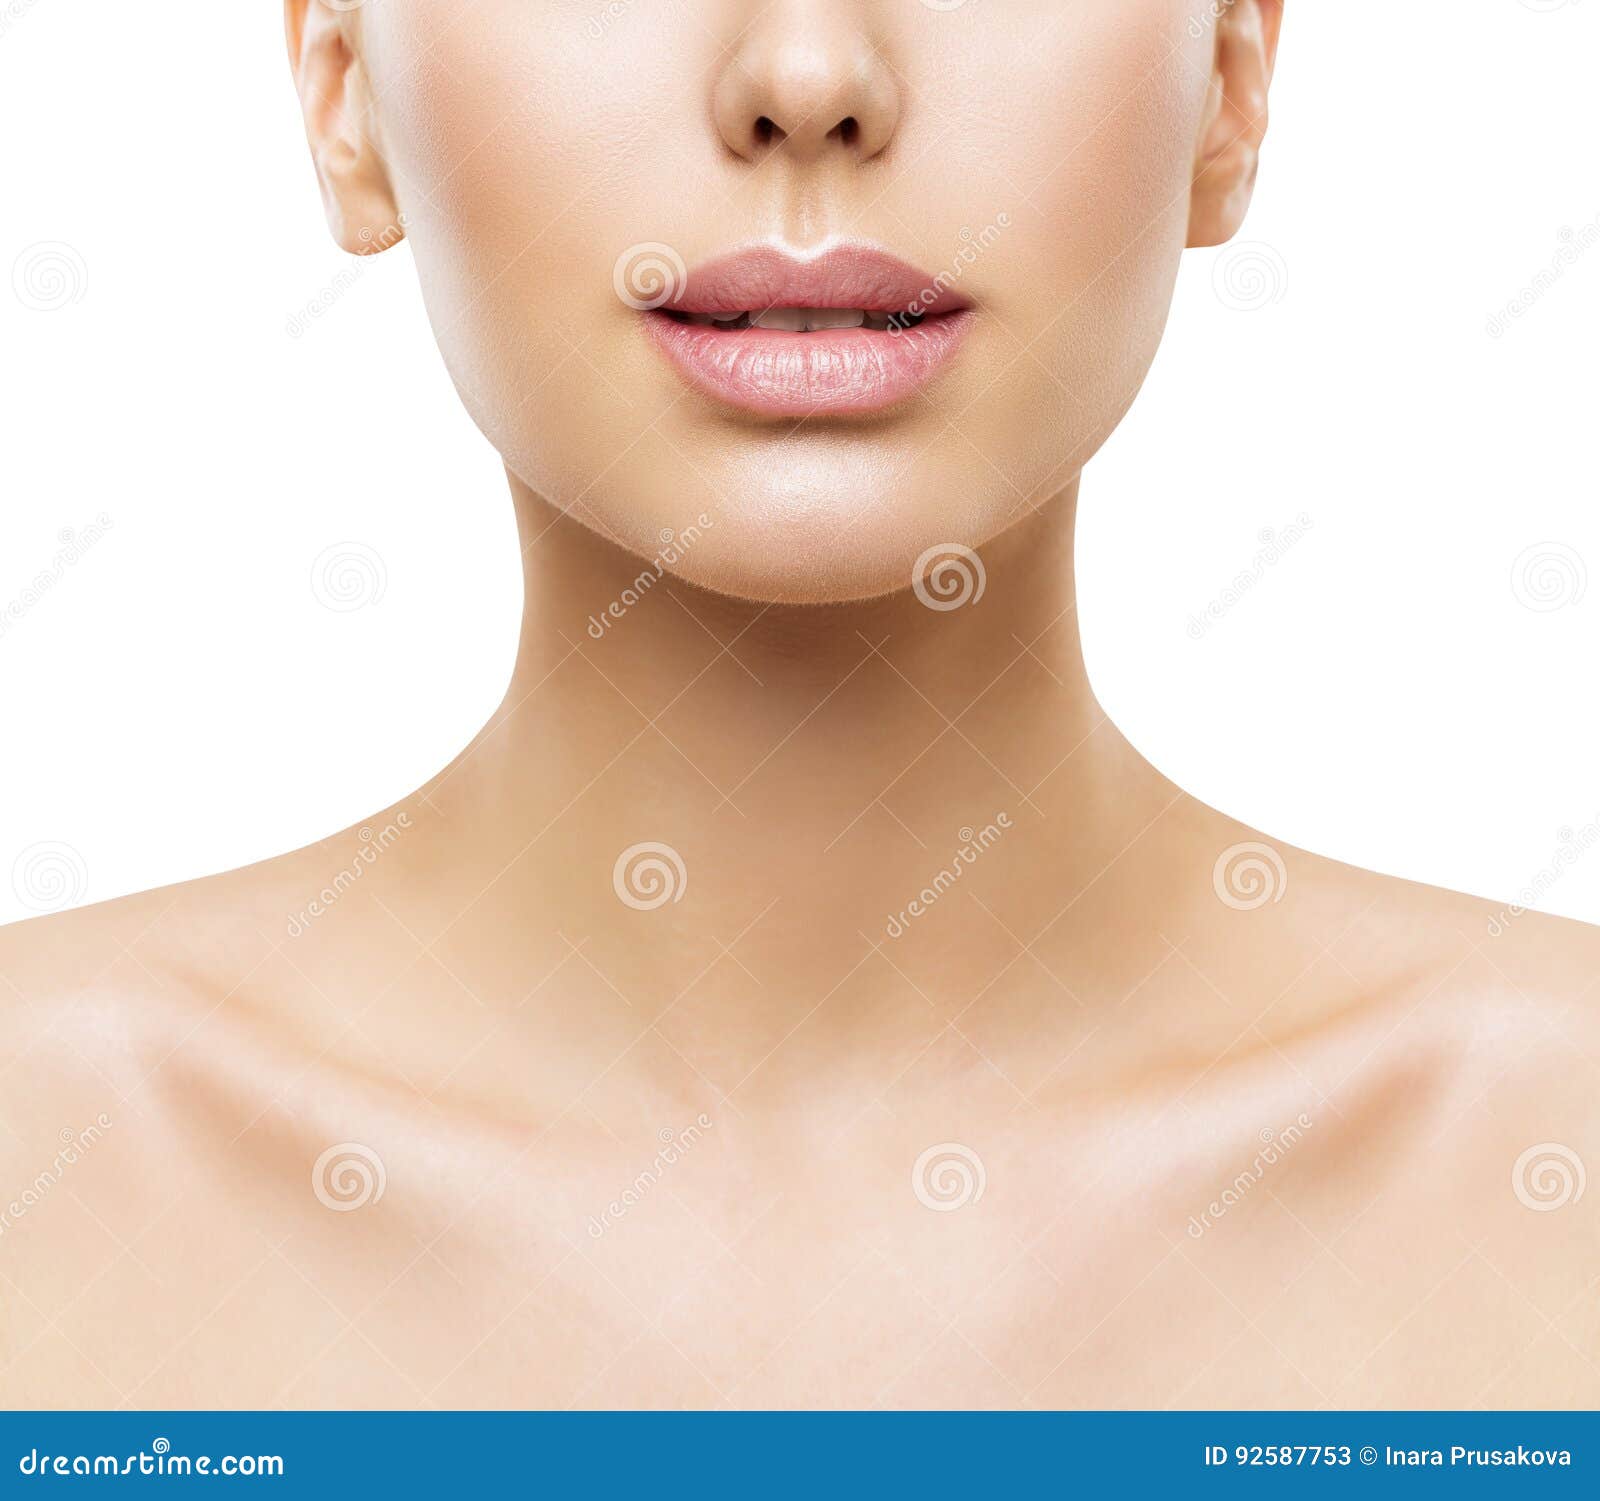 lips, woman face beauty, mouth and neck skin closeup, women skin